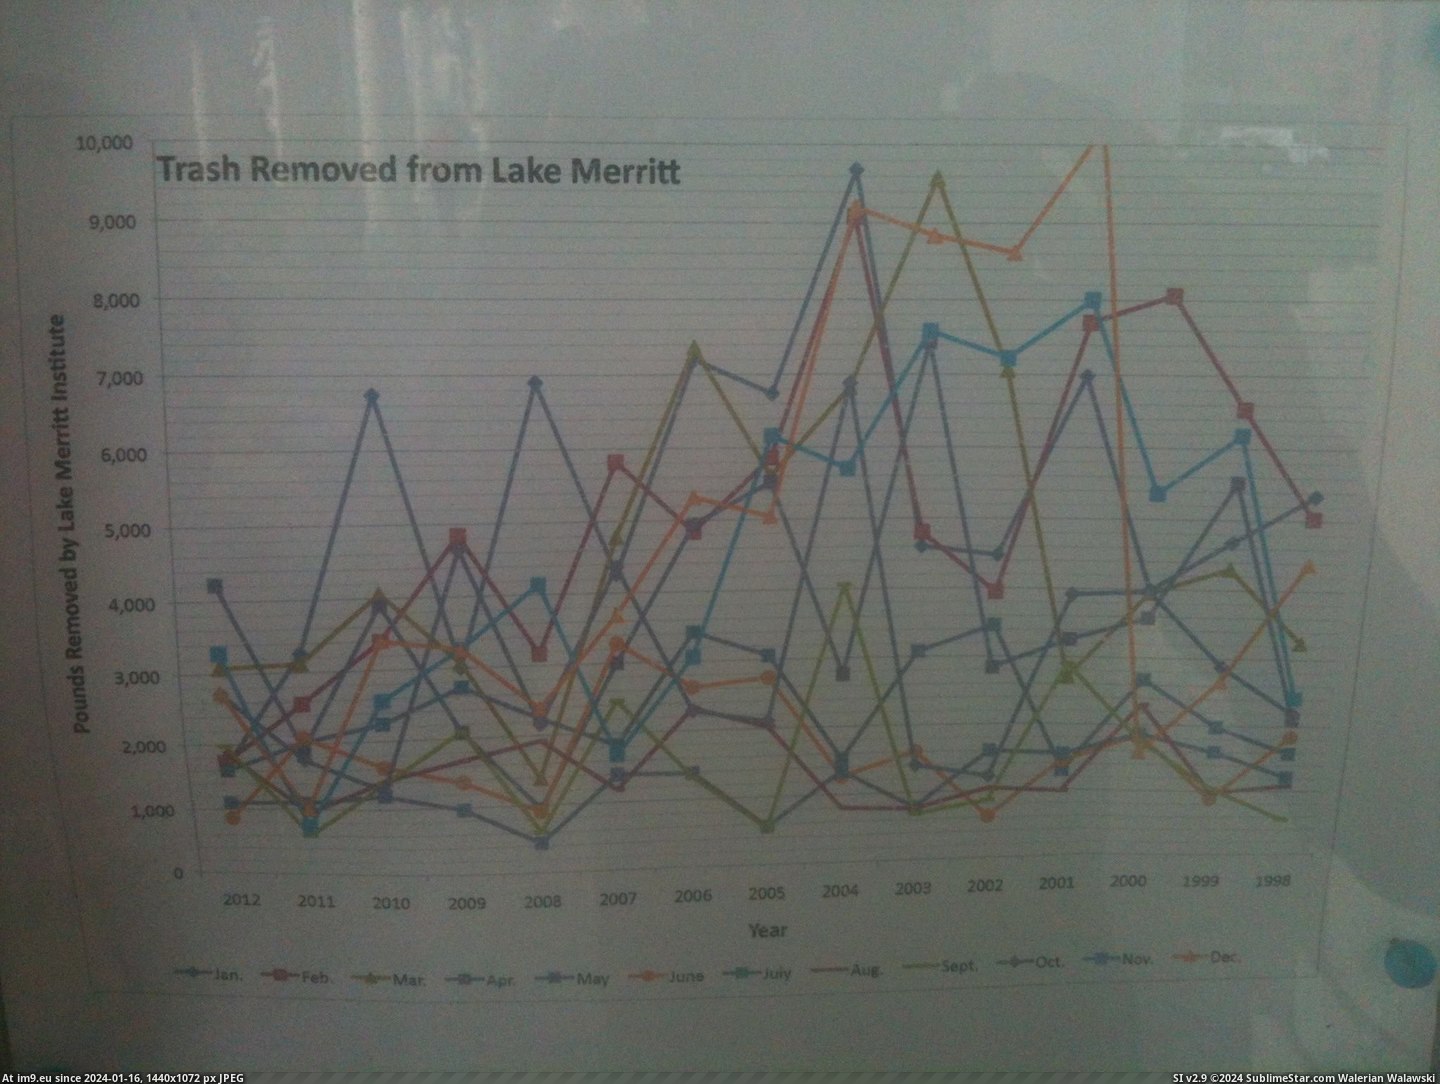 #Lake #Chart #Improved #Merritt #Removed #Trash [Dataisbeautiful] [OC] I improved a chart: “Trash Removed from Lake Merritt”—before and after 2 Pic. (Bild von album My r/DATAISBEAUTIFUL favs))